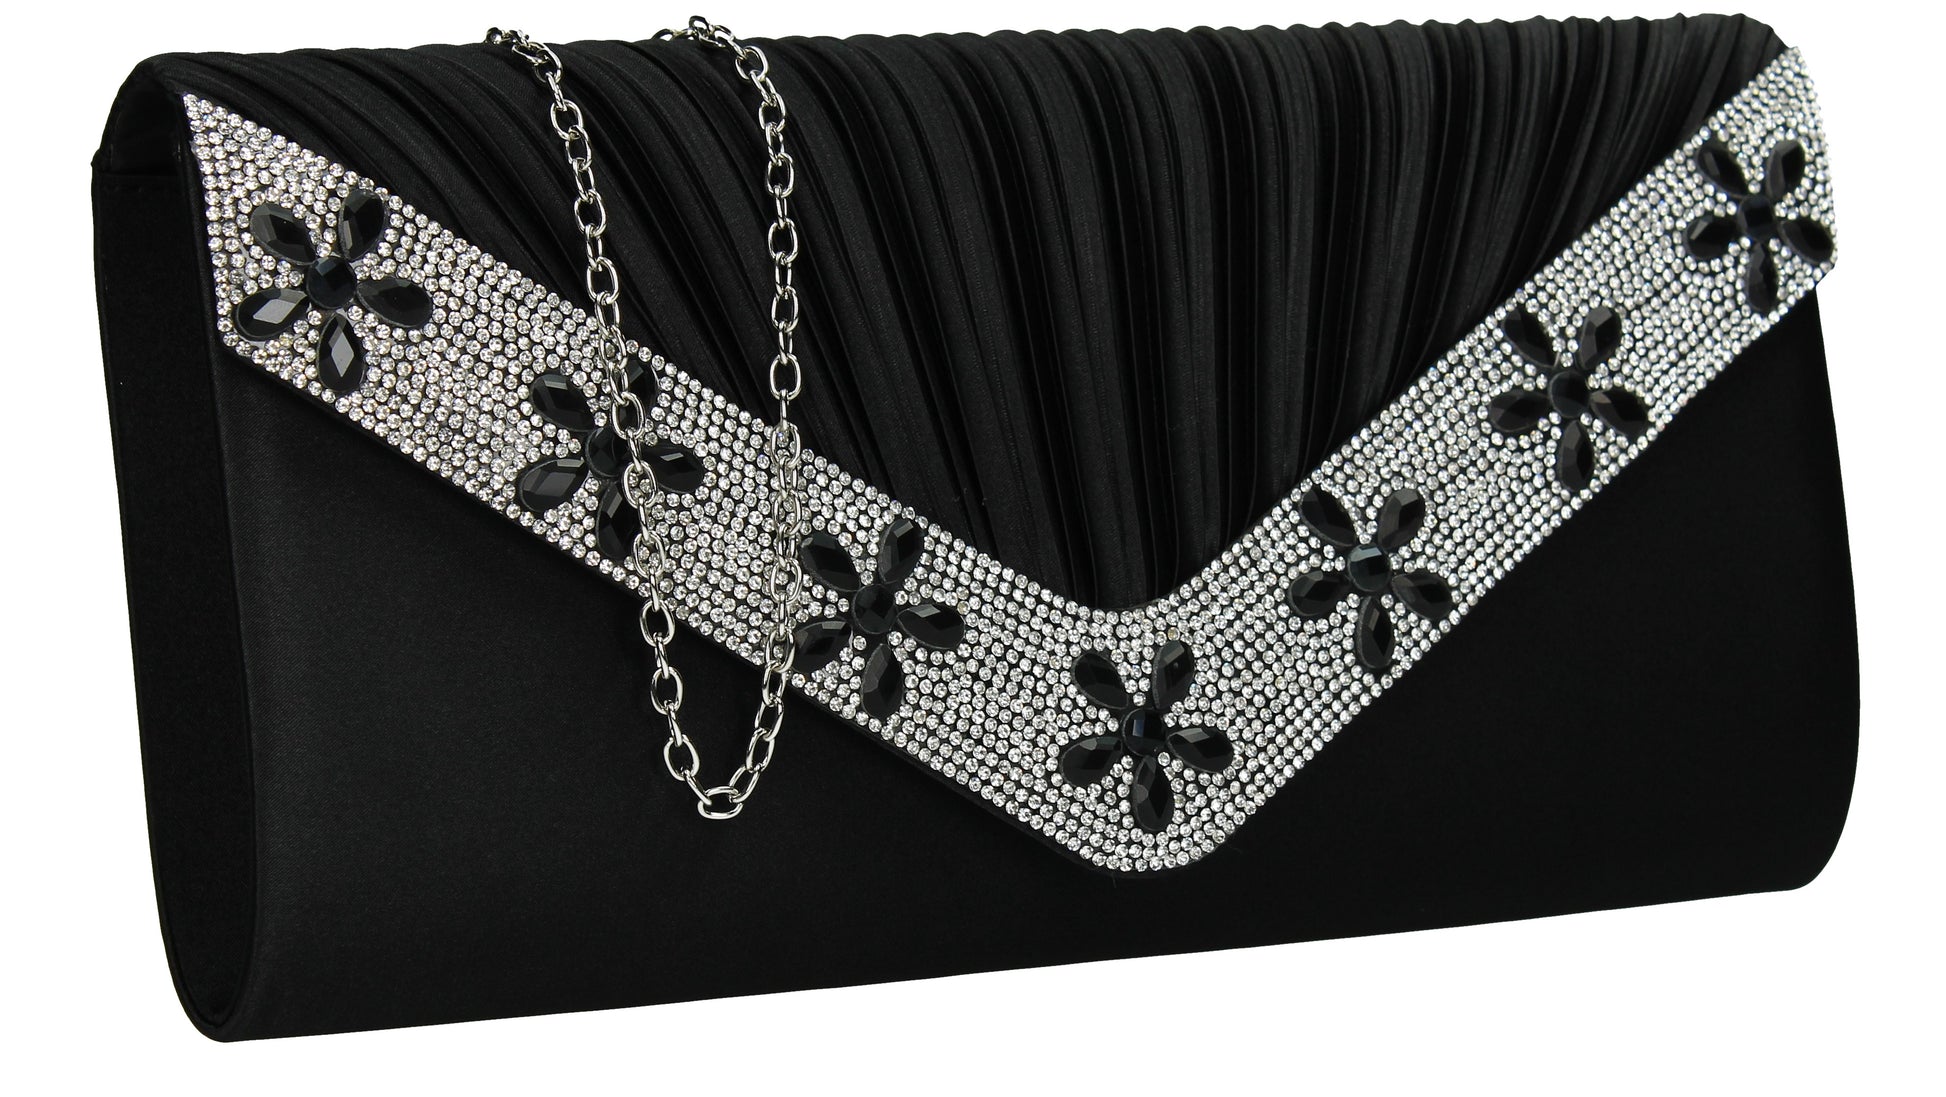 SWANKYSWANS Rylie Floral Diamante Clutch Bag Black Cute Cheap Clutch Bag For Weddings School and Work